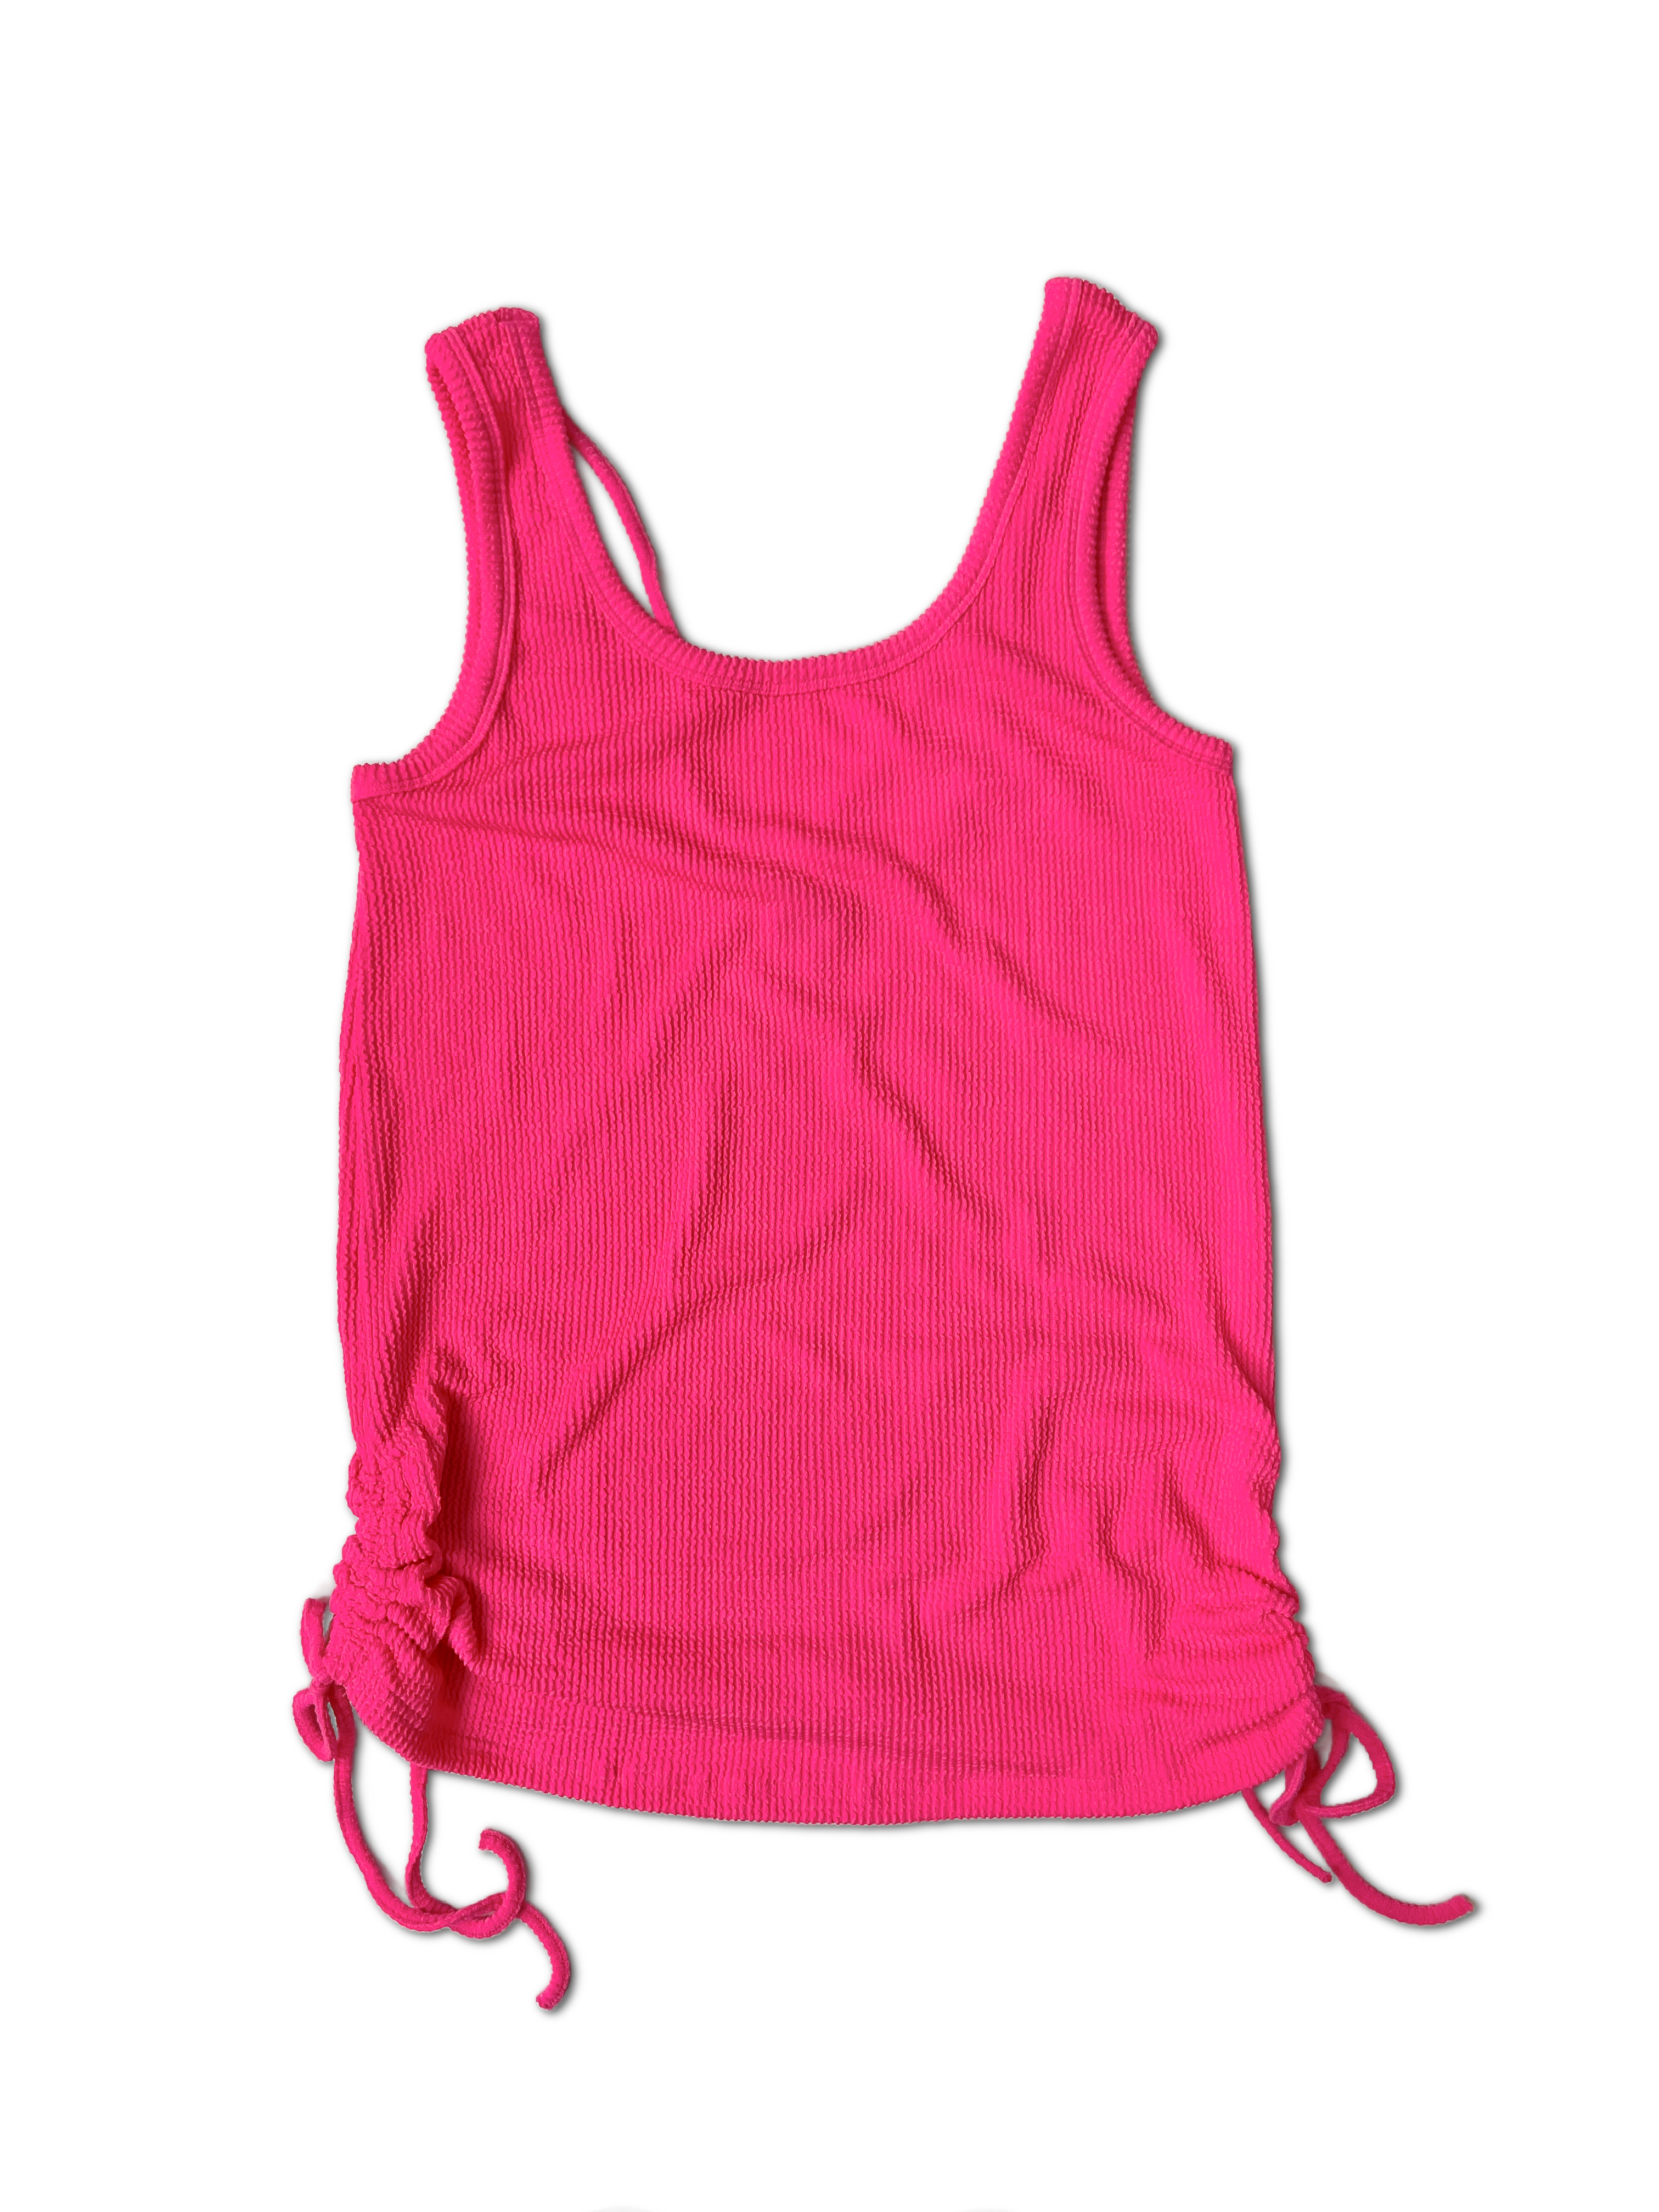 Take it Slow - Hot Pink Coverup-Boutique Simplified-Urban Threadz Boutique, Women's Fashion Boutique in Saugatuck, MI